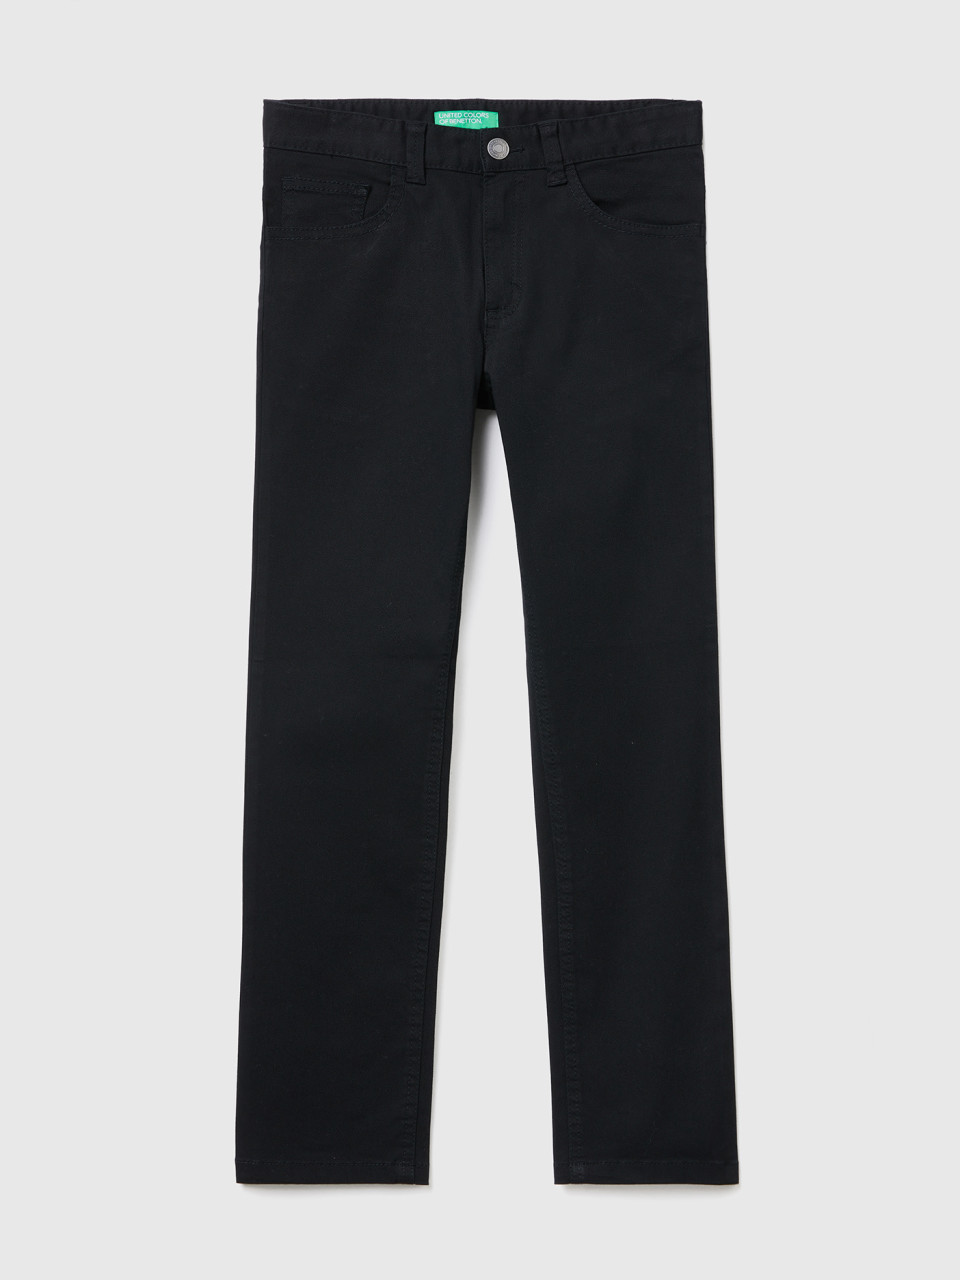 Benetton, Five Pocket Slim Fit Trousers, Black, Kids